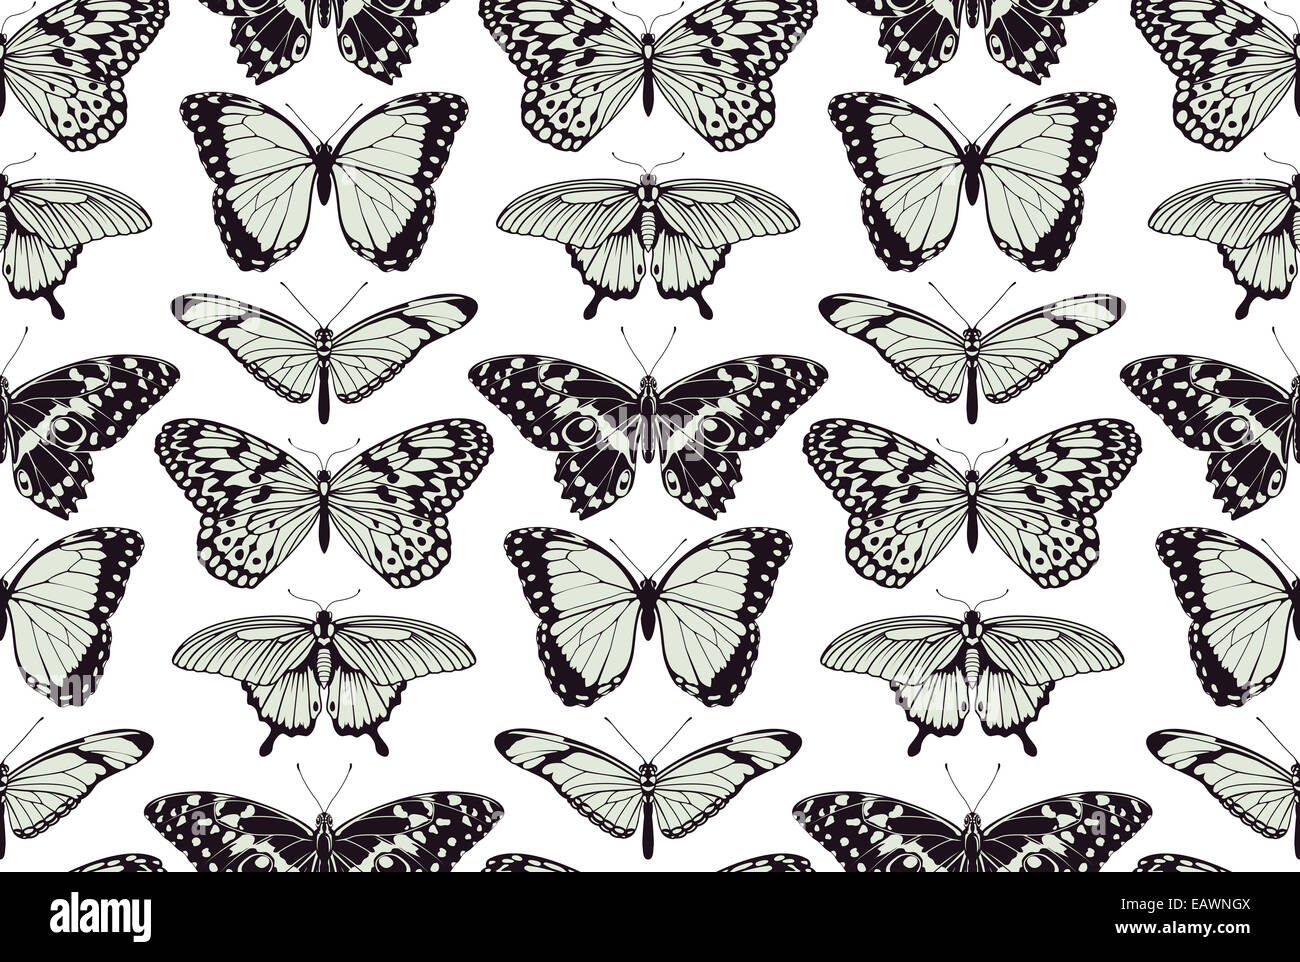 A butterfly seamless tilable vintage background pattern design illustration Stock Photo